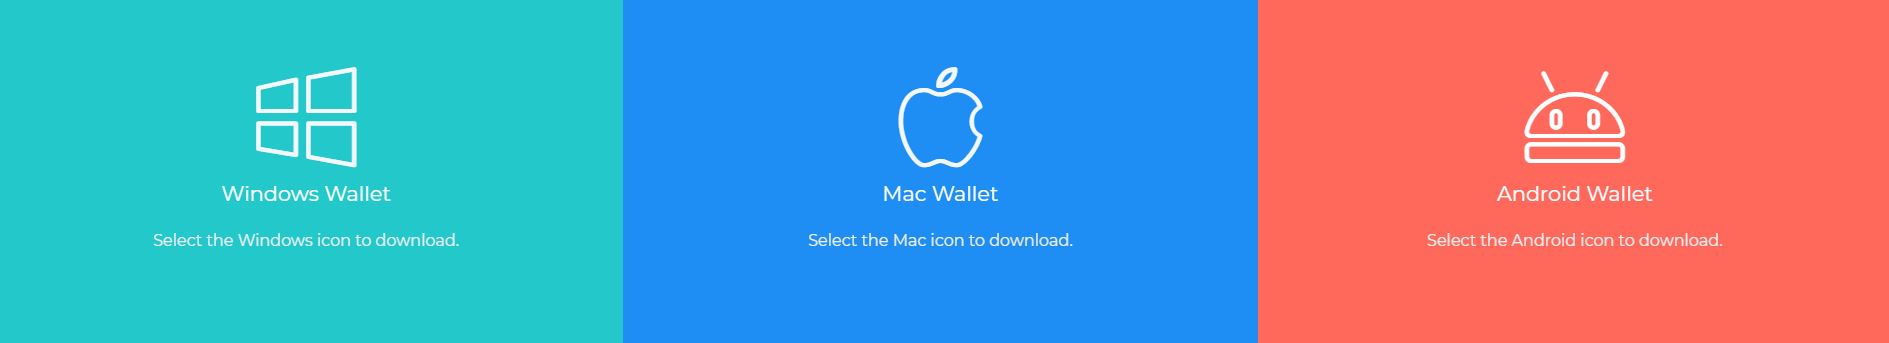 Cannabis coin mac wallet download app